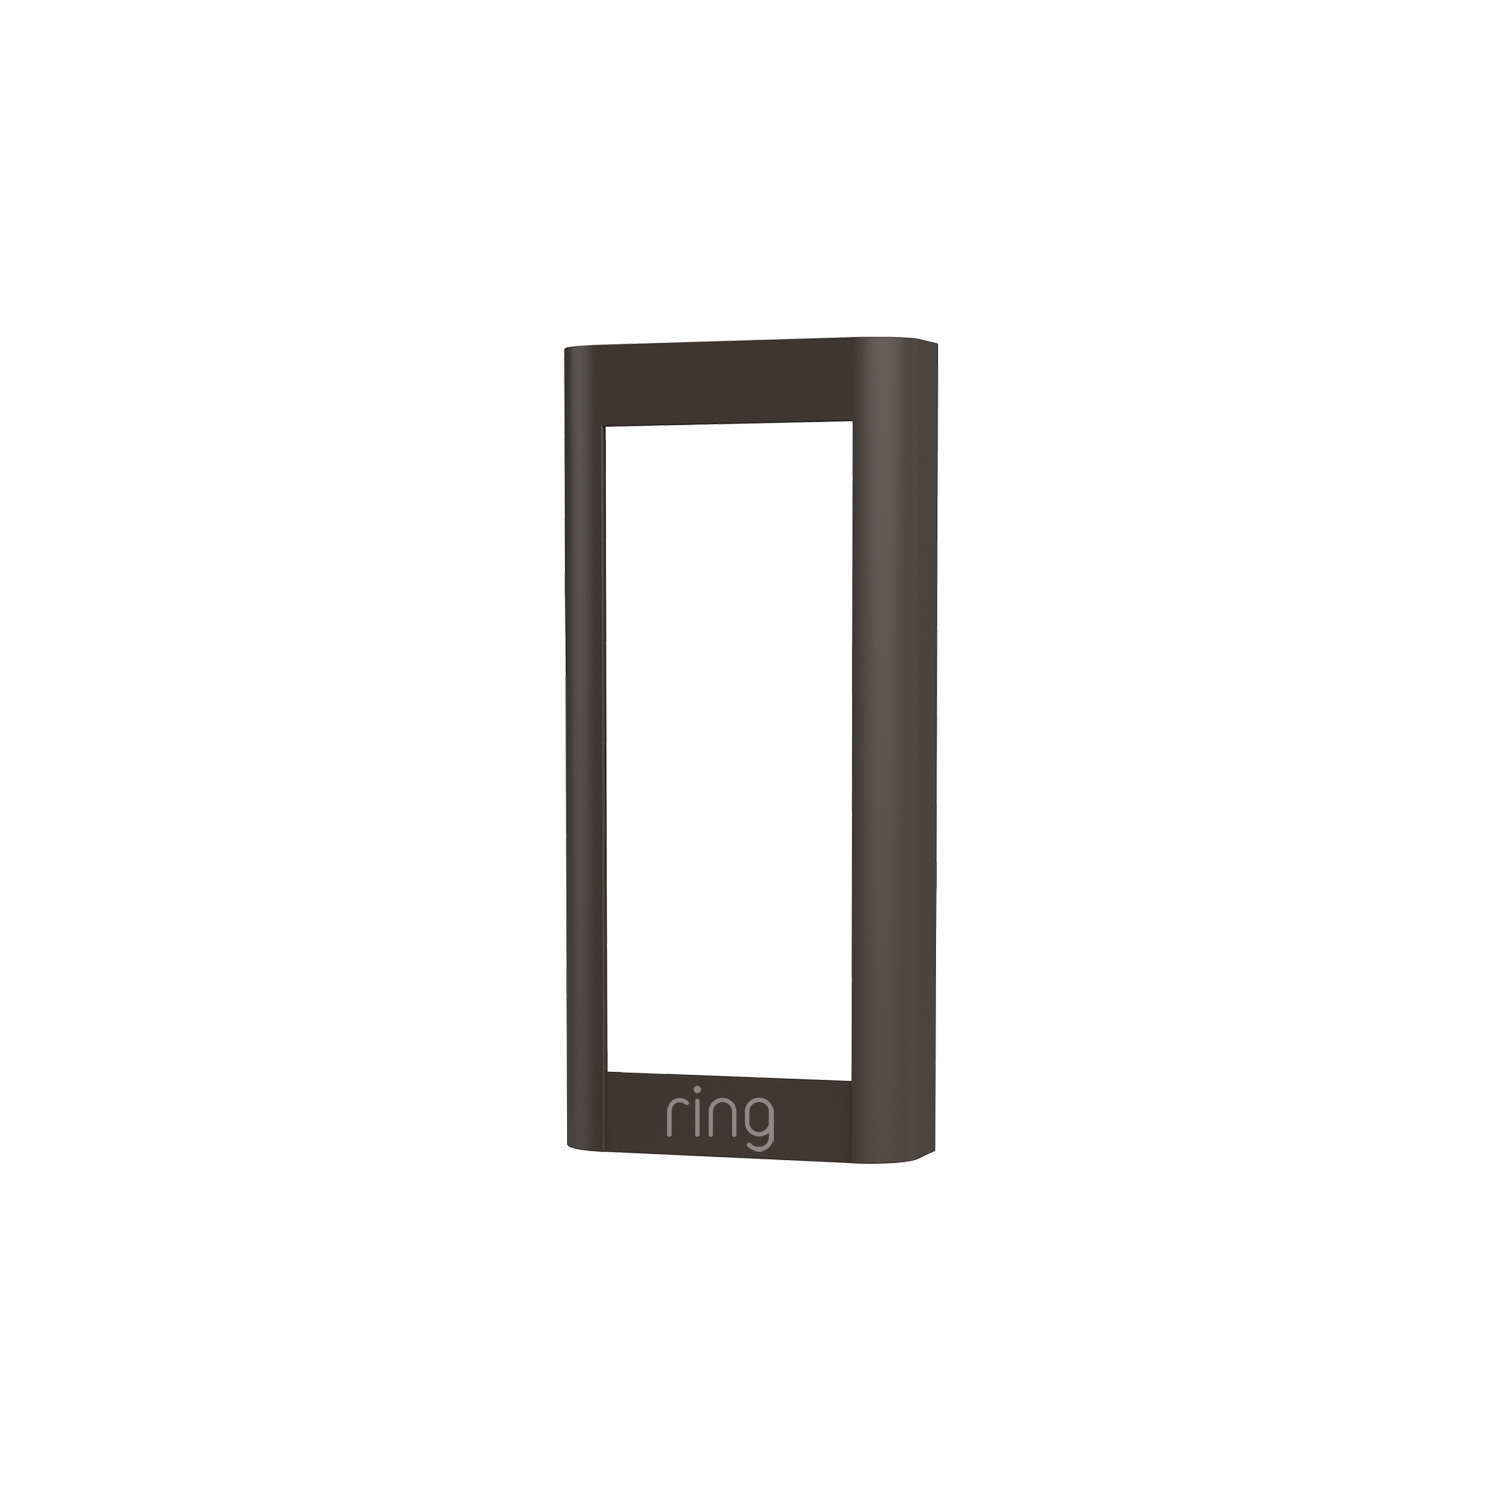 Interchangeable Faceplate (for Video Doorbell Wired) - Mocha Brown